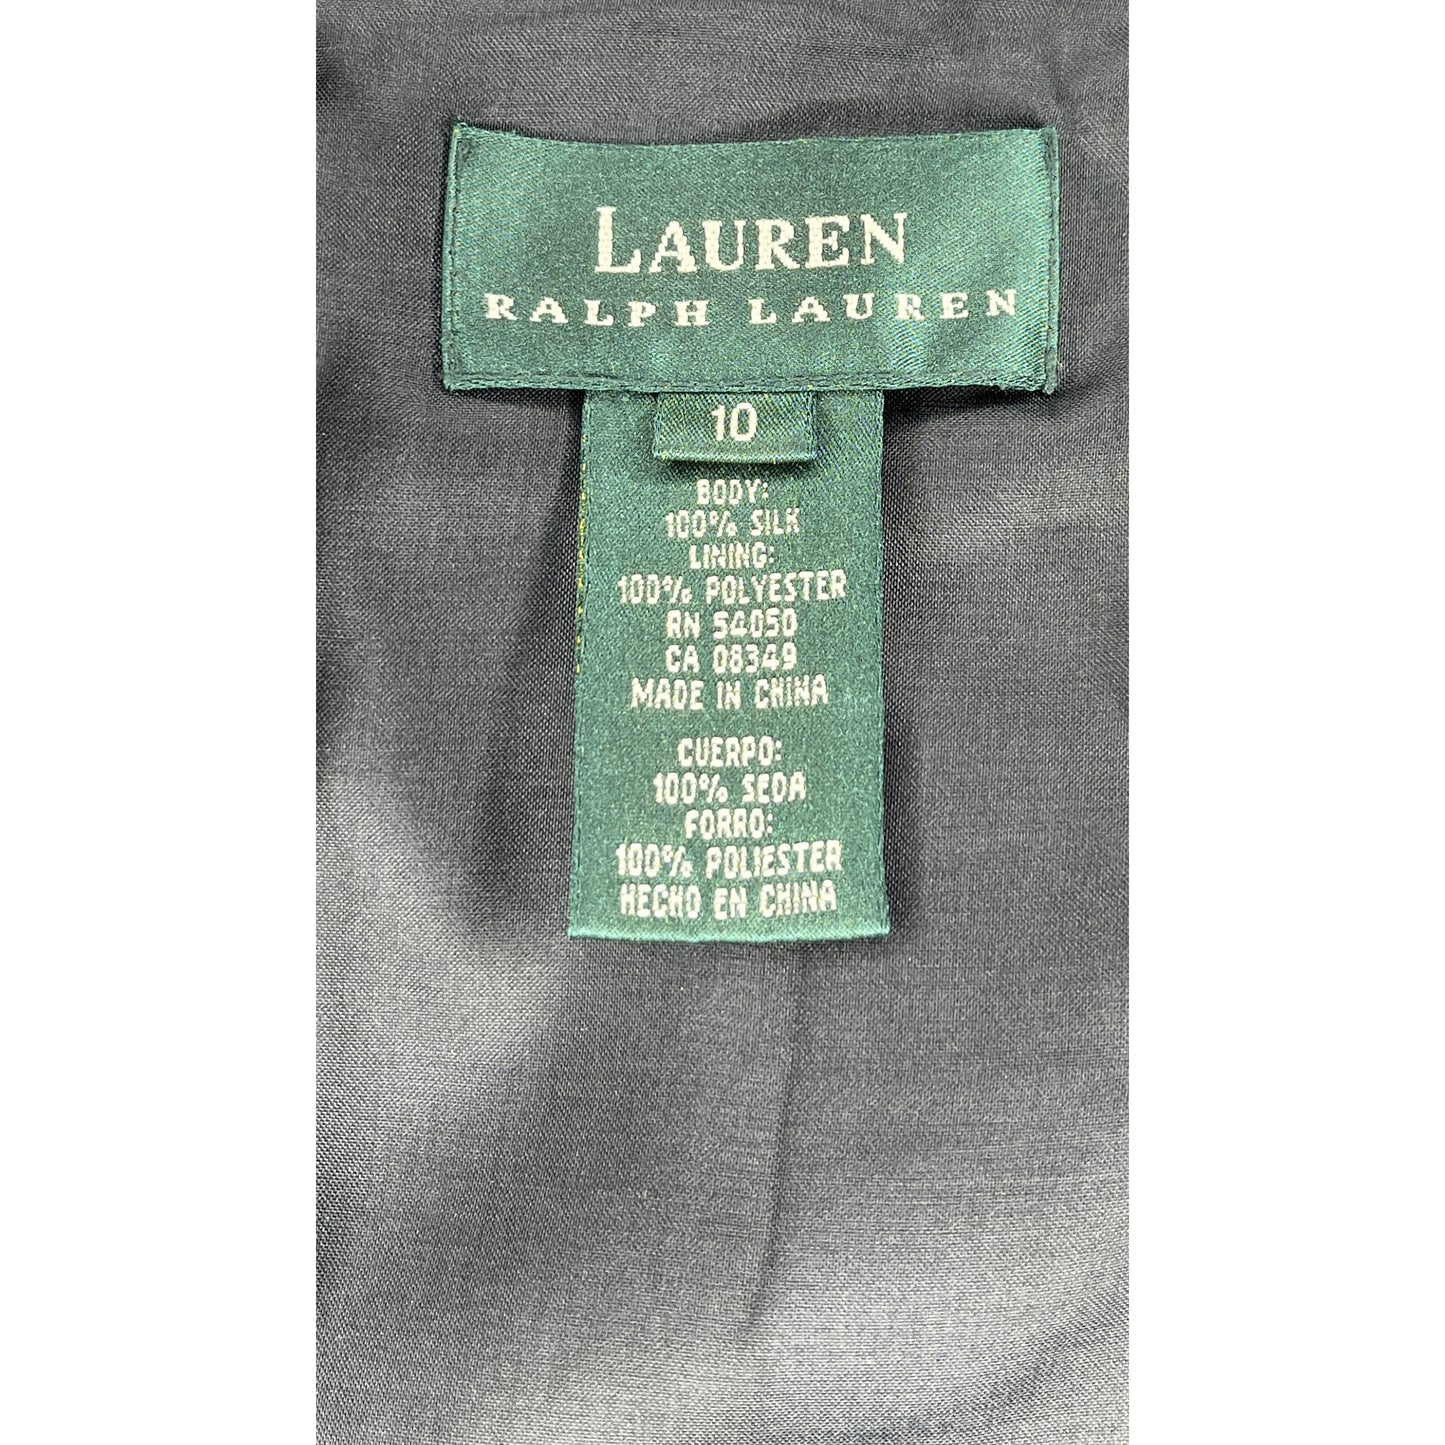 Ralph Lauren Gown Strapless Floor Length Black Size 10 SKU 000411